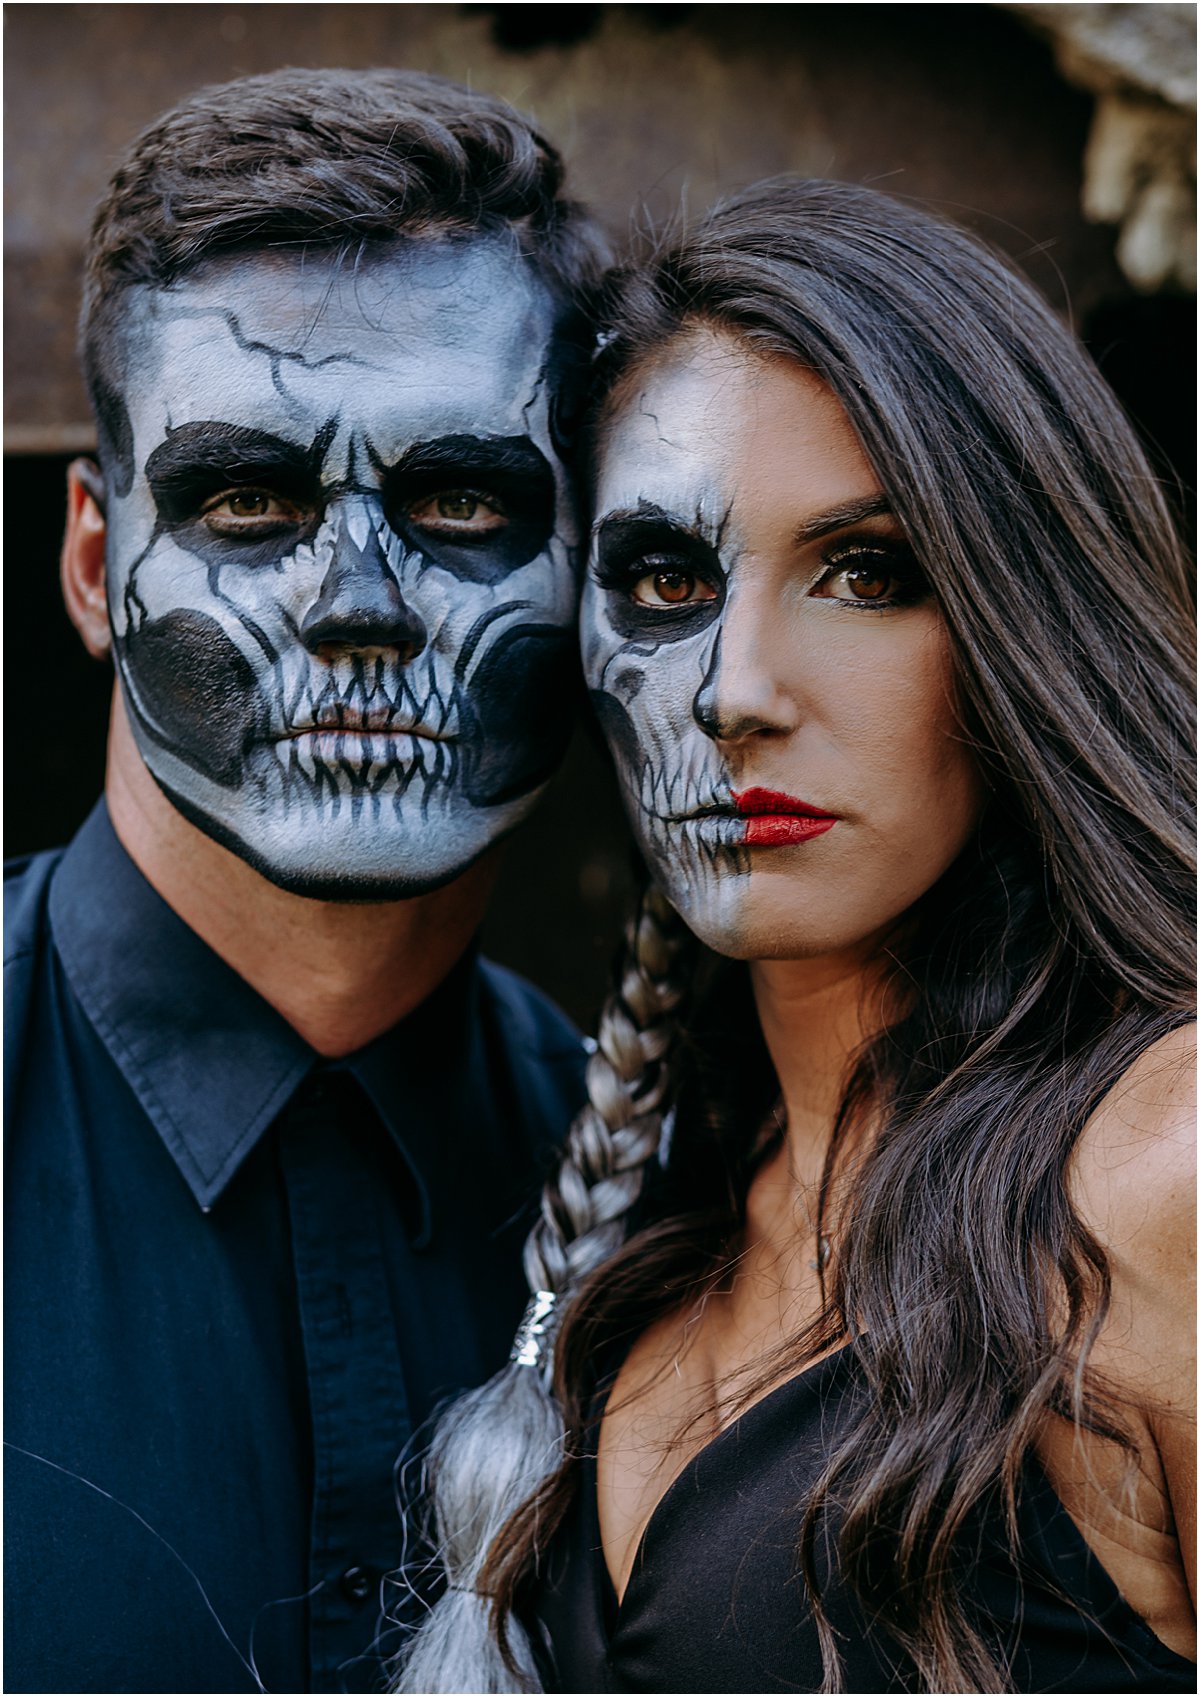 Halloween Face Paint | Halloween Wedding Ideas | Palm Beach, FL | Married in Palm Beach | www.marriedinpalmbeach.com | Samantha Farmer Photography